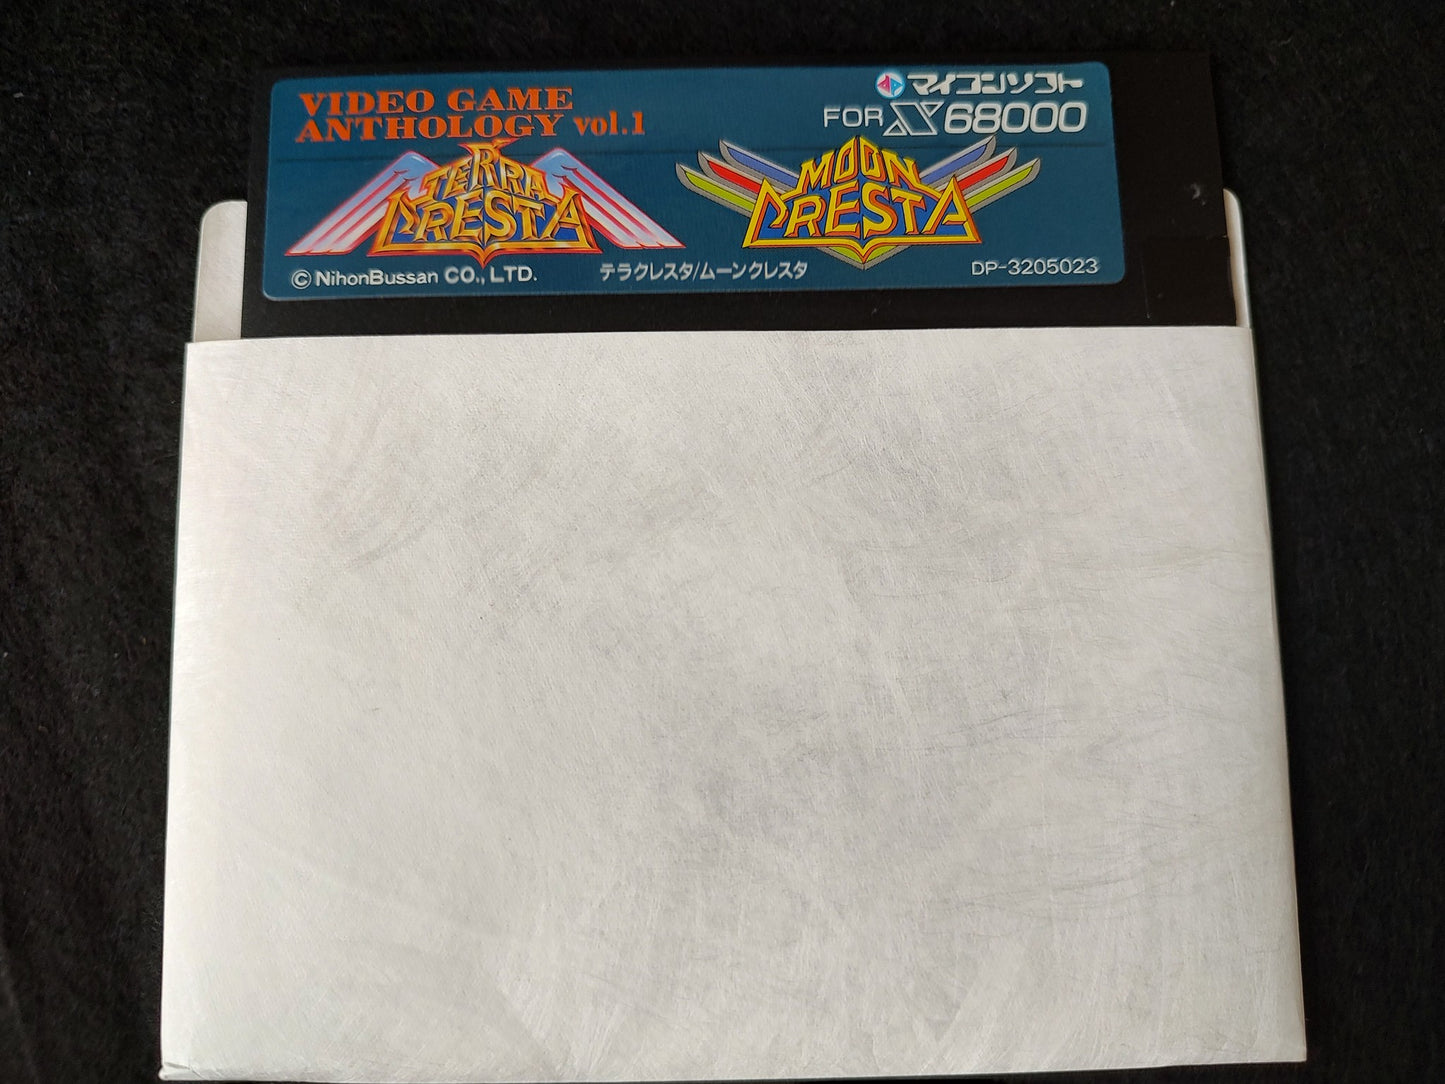 TERRA CRESTA, MOON CRESTA SHARP X68000 Game w/Manual and Box set, Working-f0612-